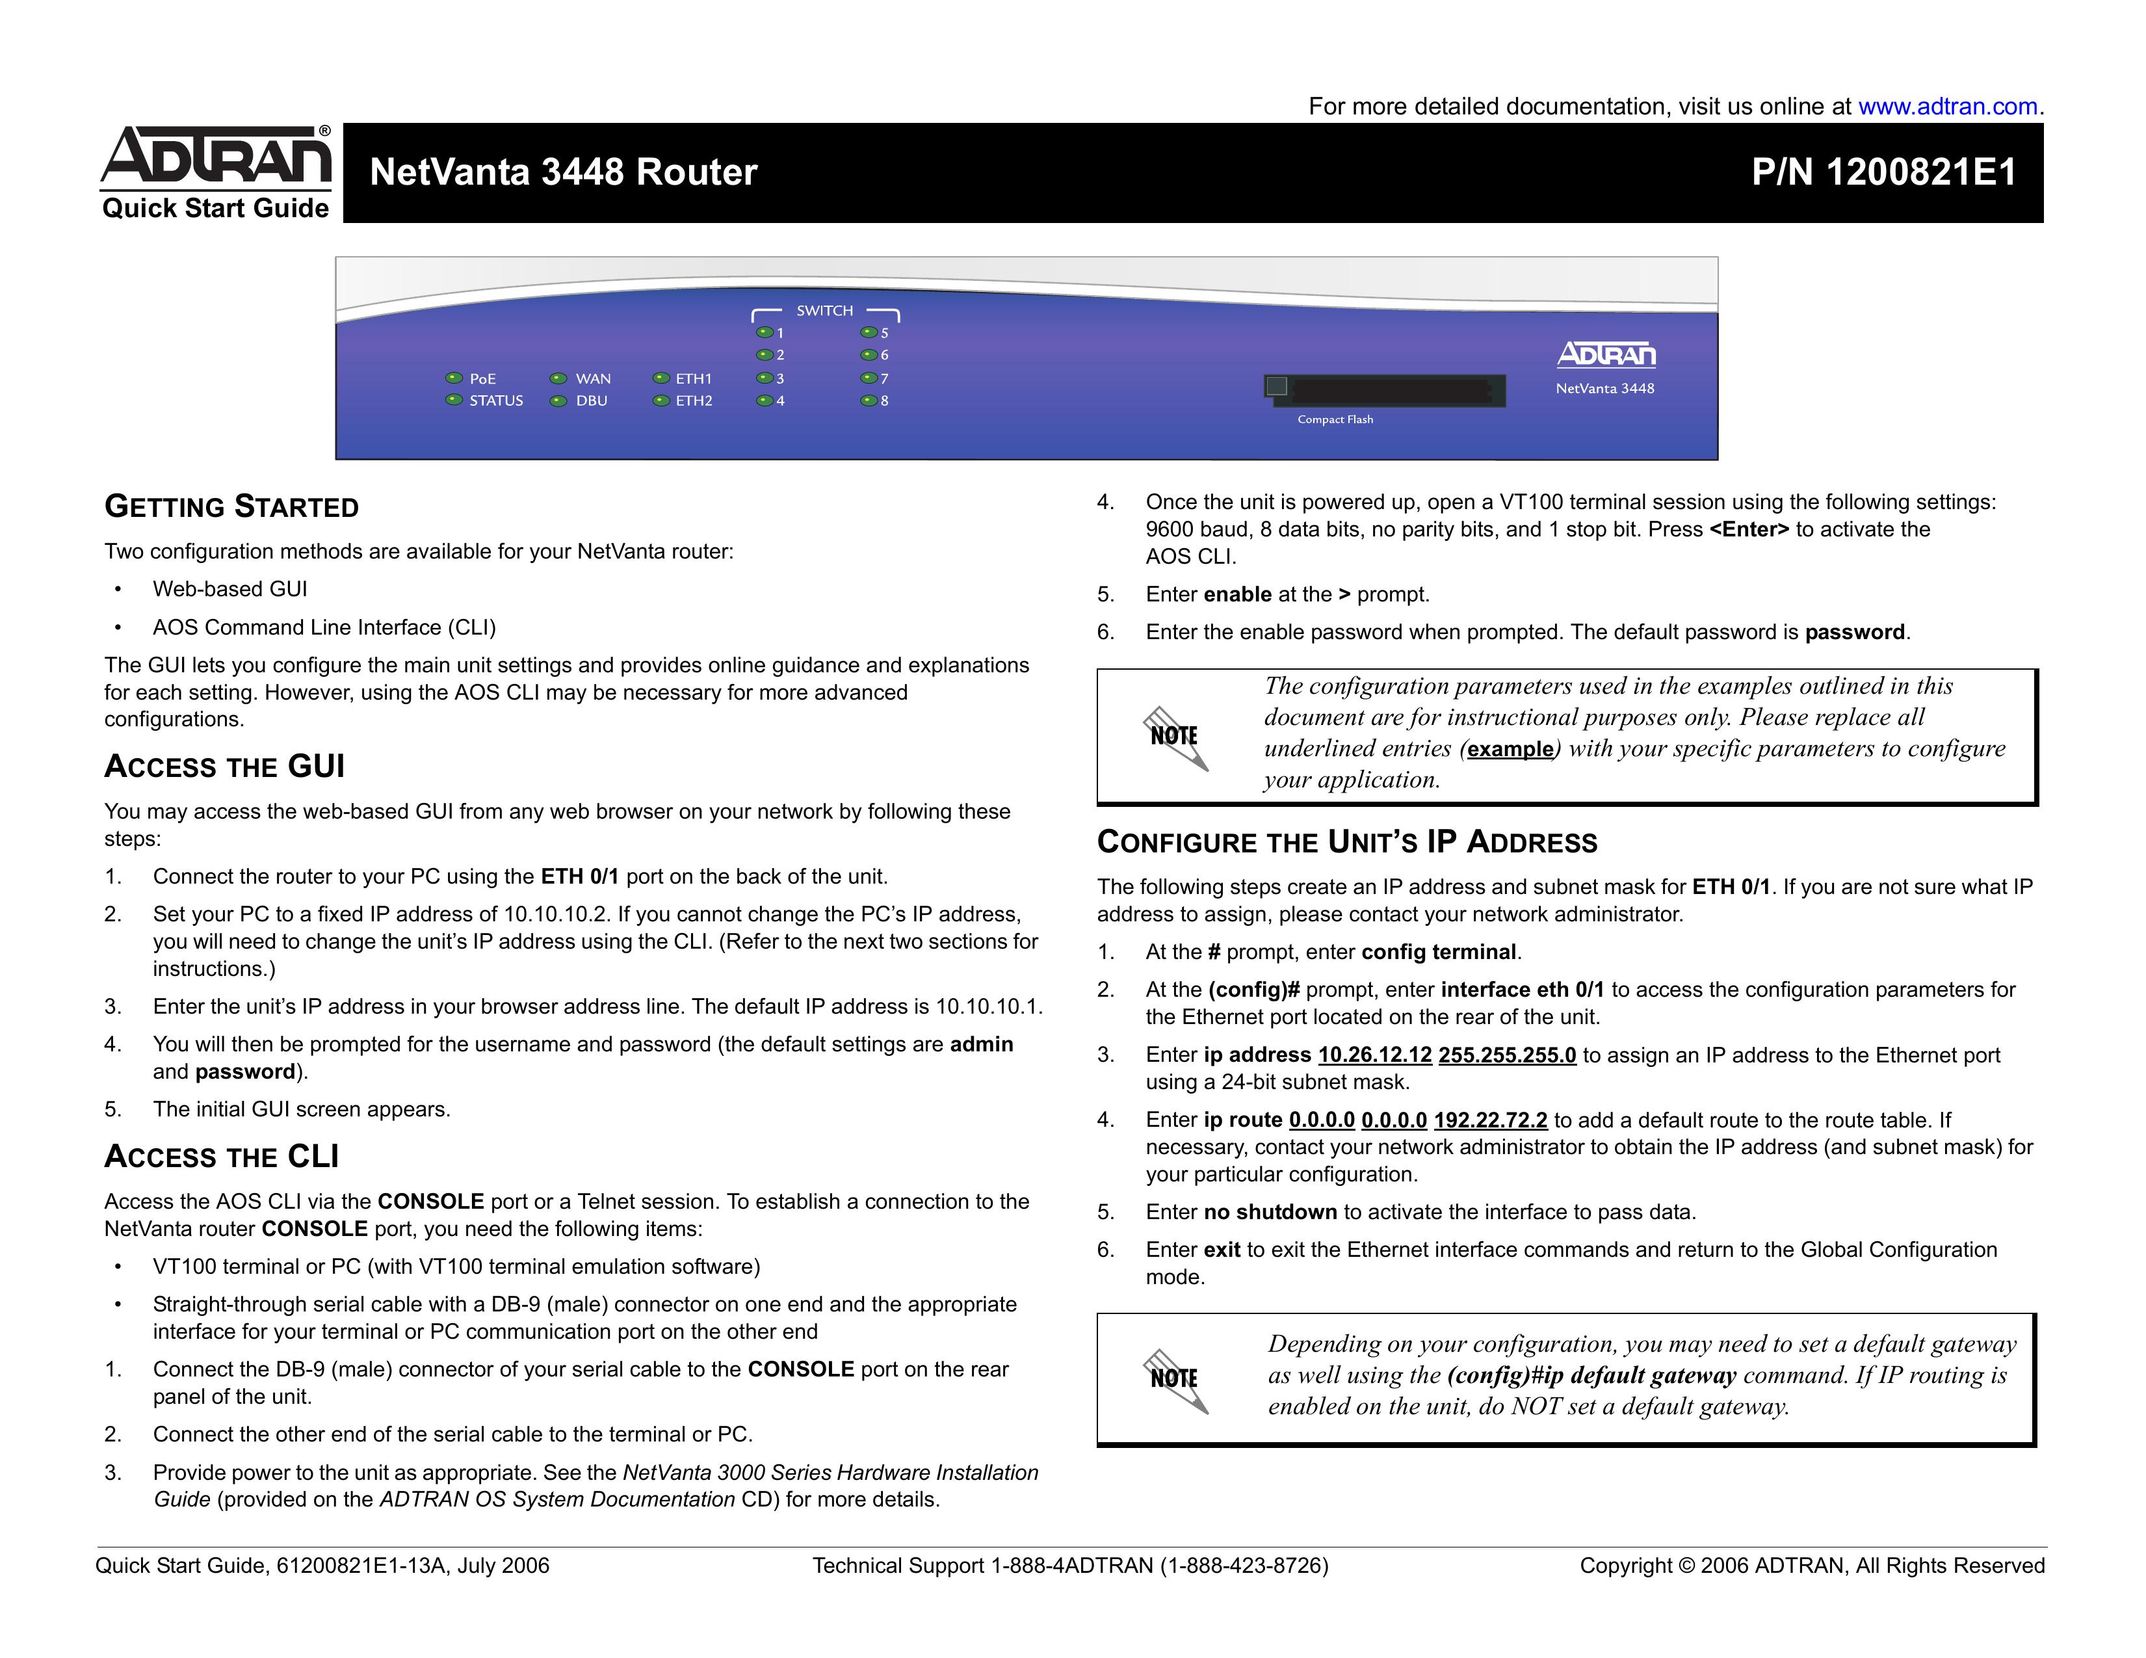 ADTRAN 3448 Network Router User Manual